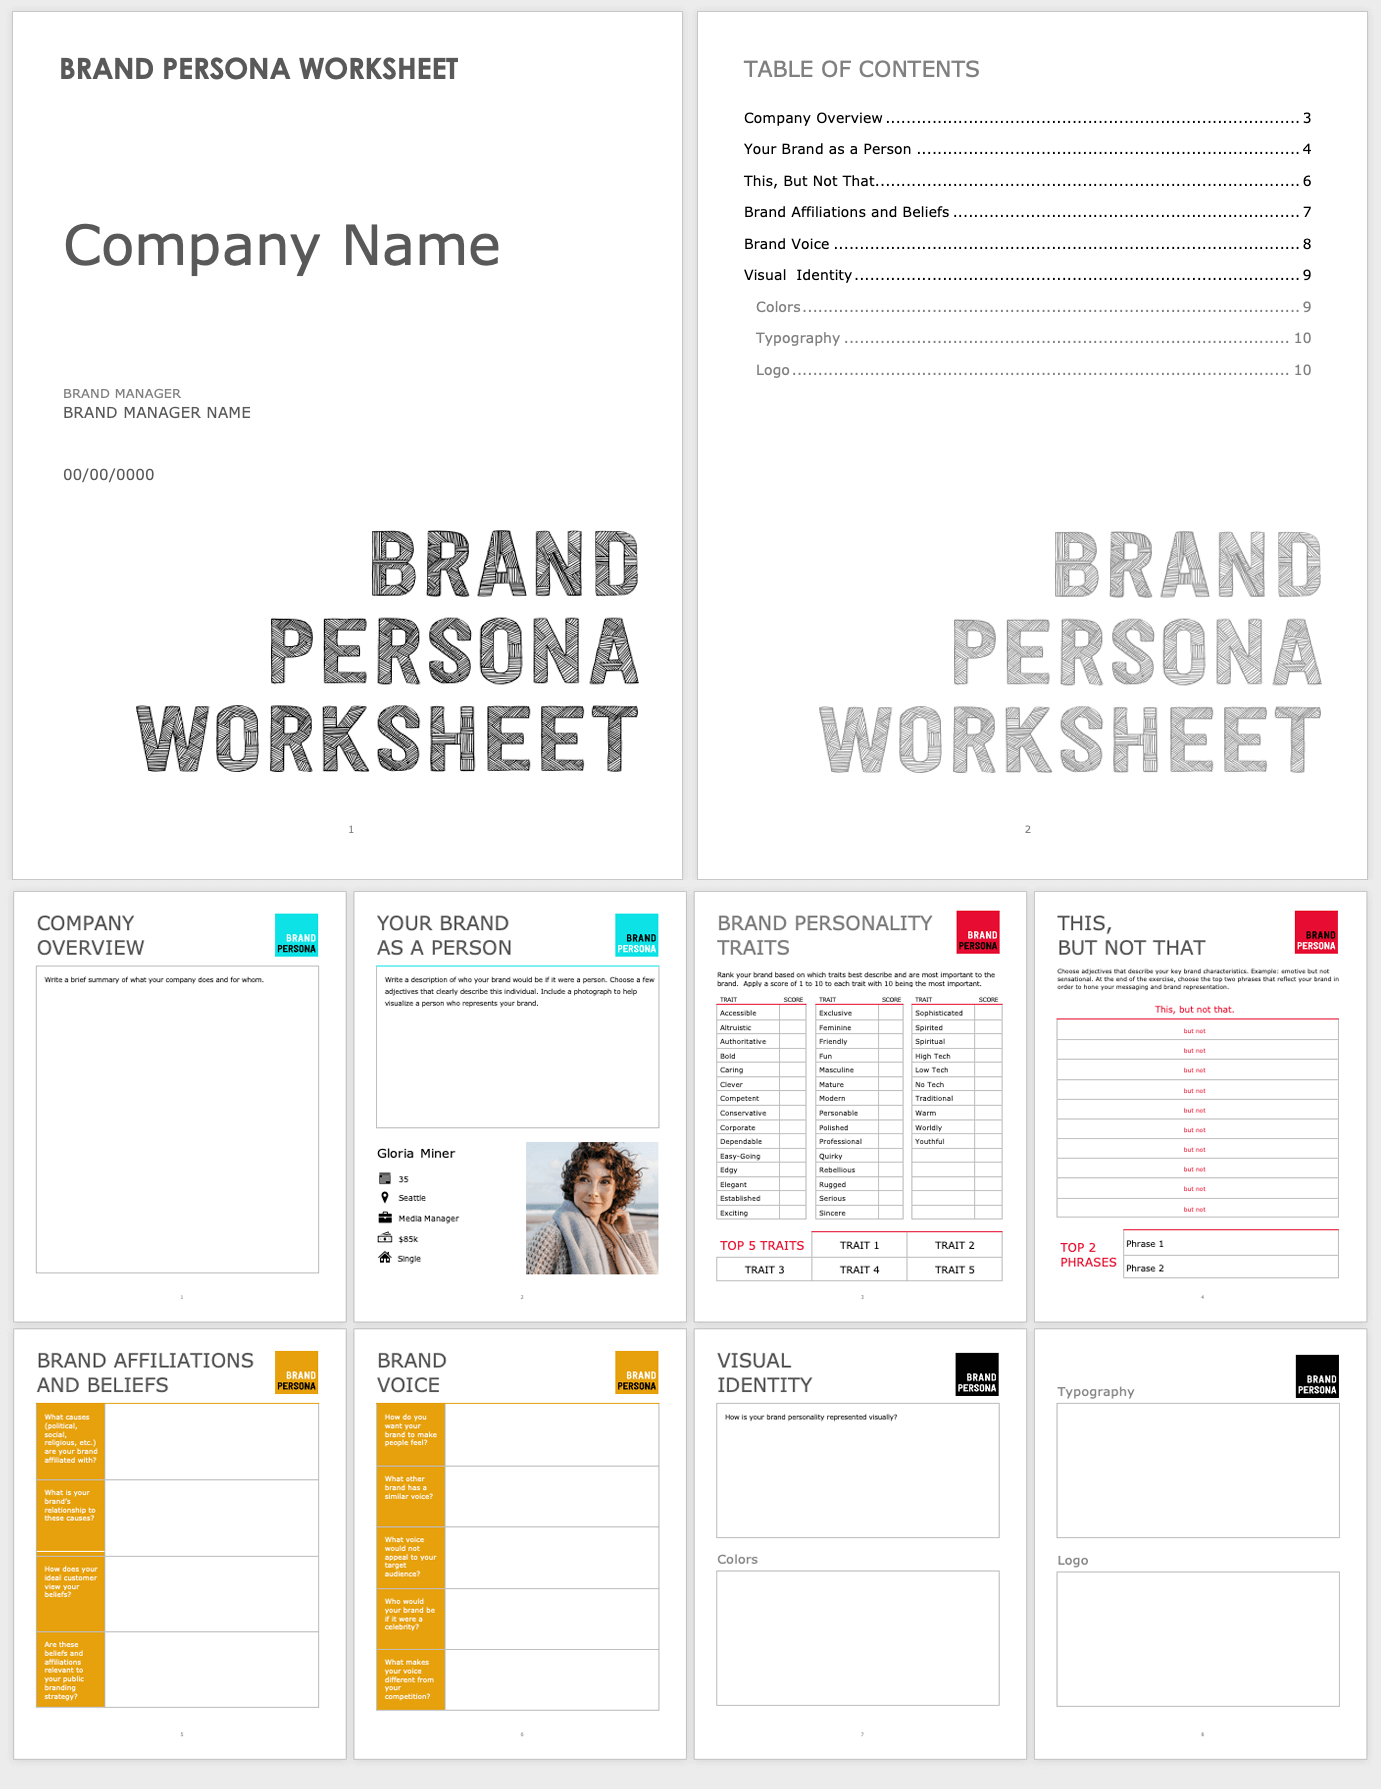 Brand Persona Worksheet